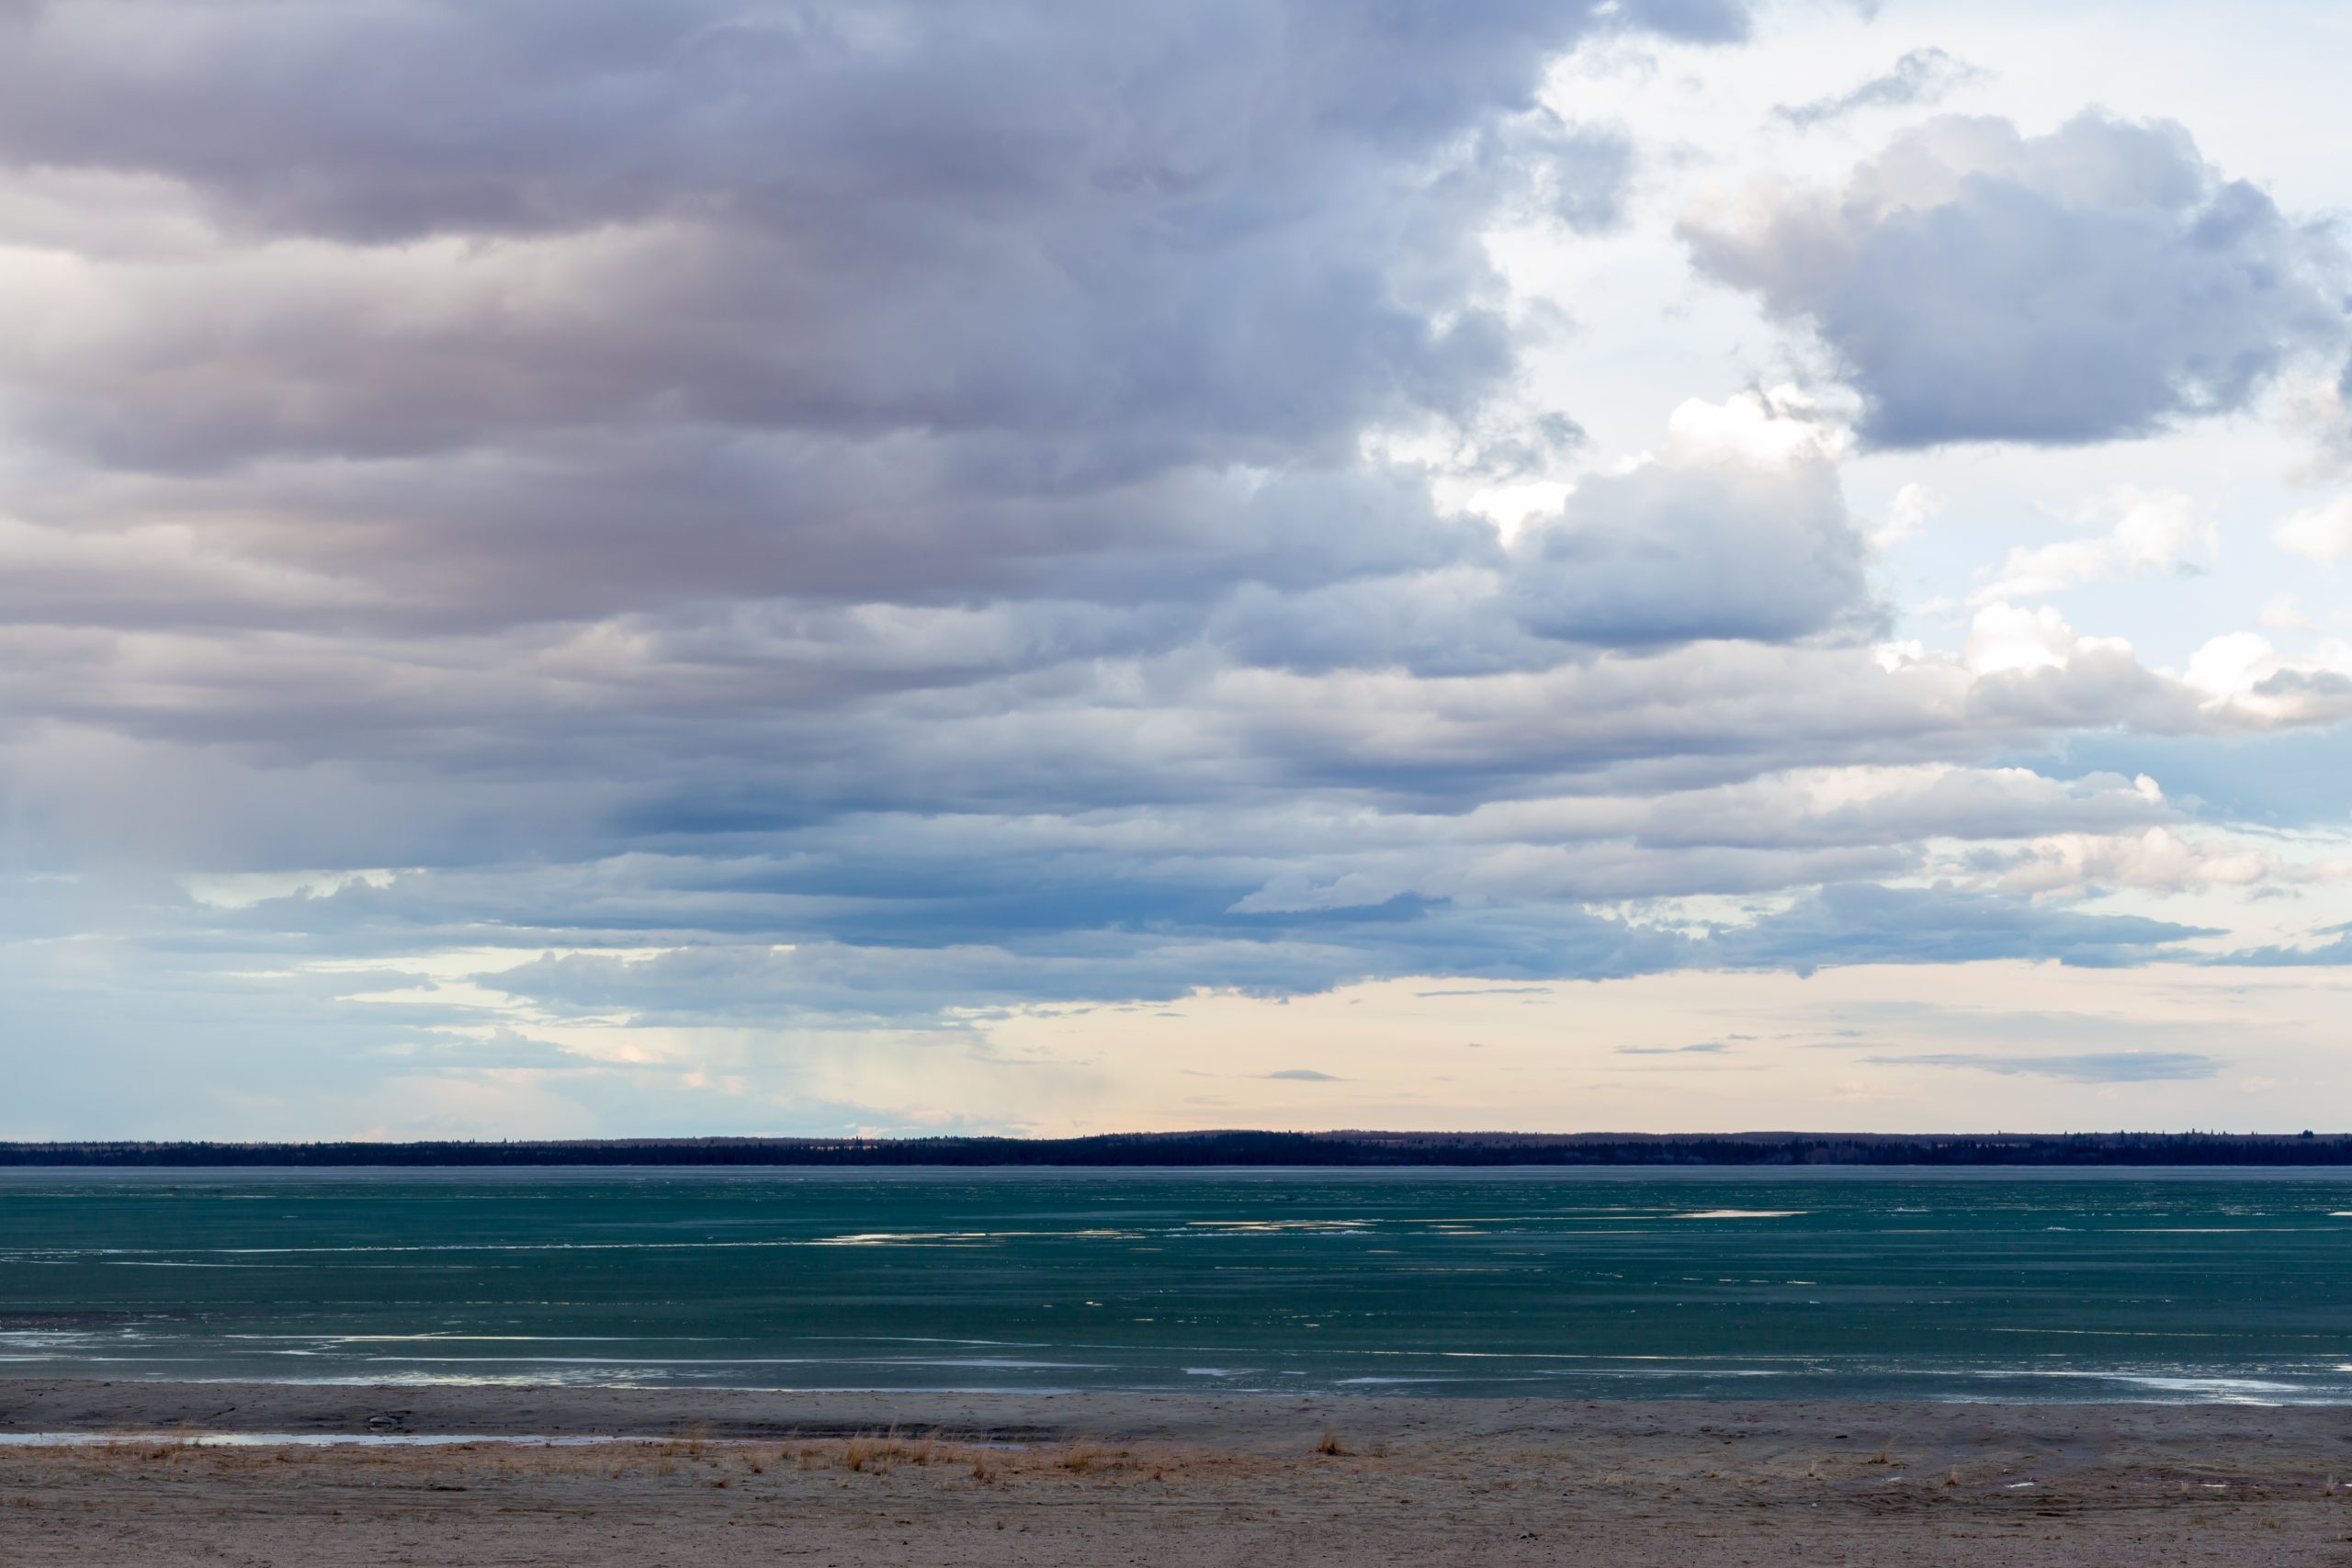 Brightsand lake Saskatchewan lake shore line in spring thaw with